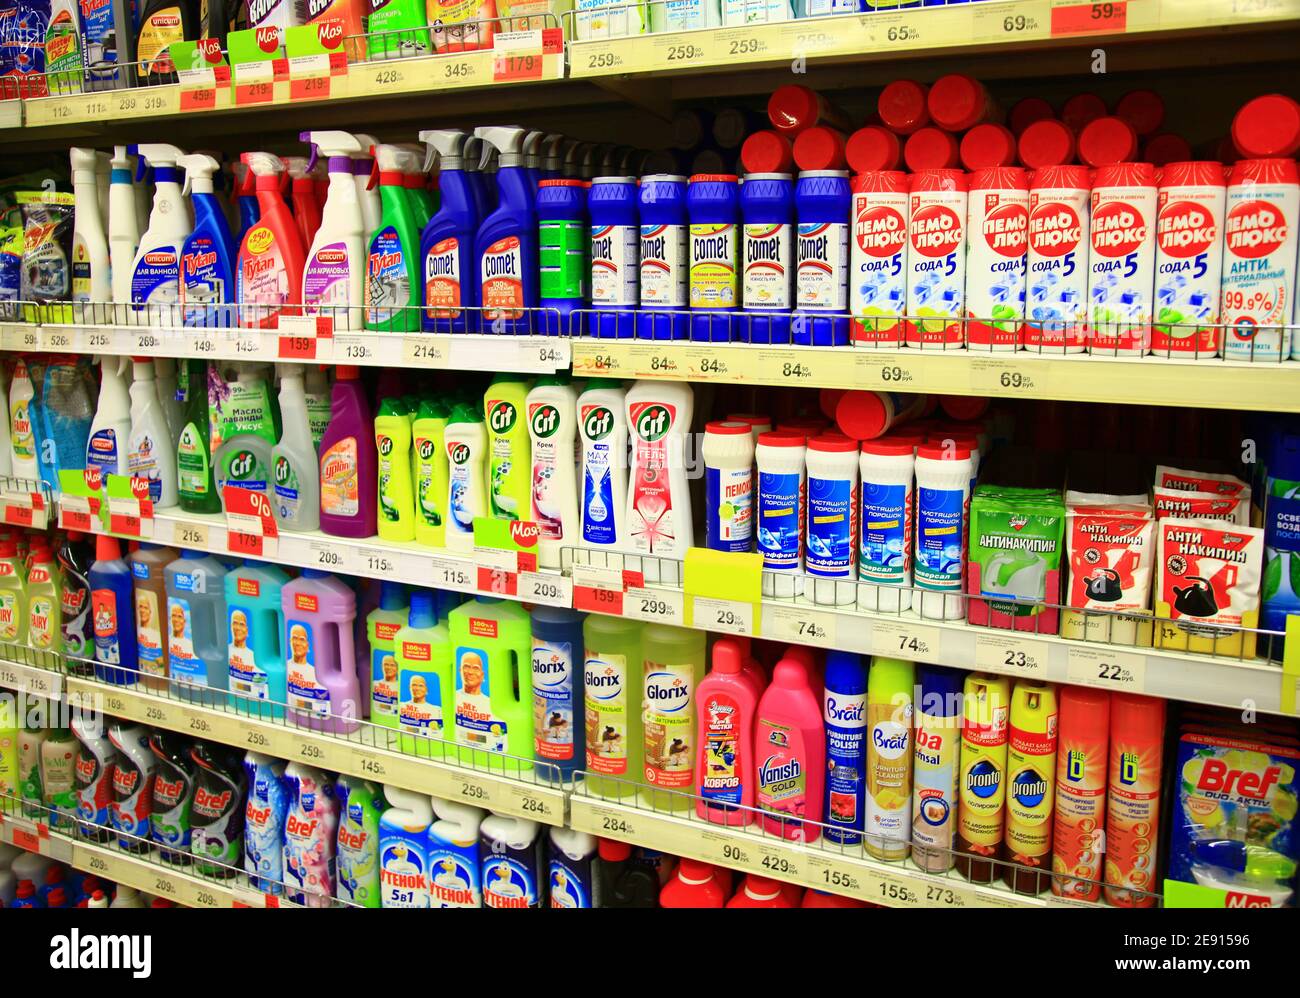 https://c8.alamy.com/comp/2E91596/kaliningrad-russia-january-31-2021-cleaning-products-on-supermarket-shelves-2E91596.jpg